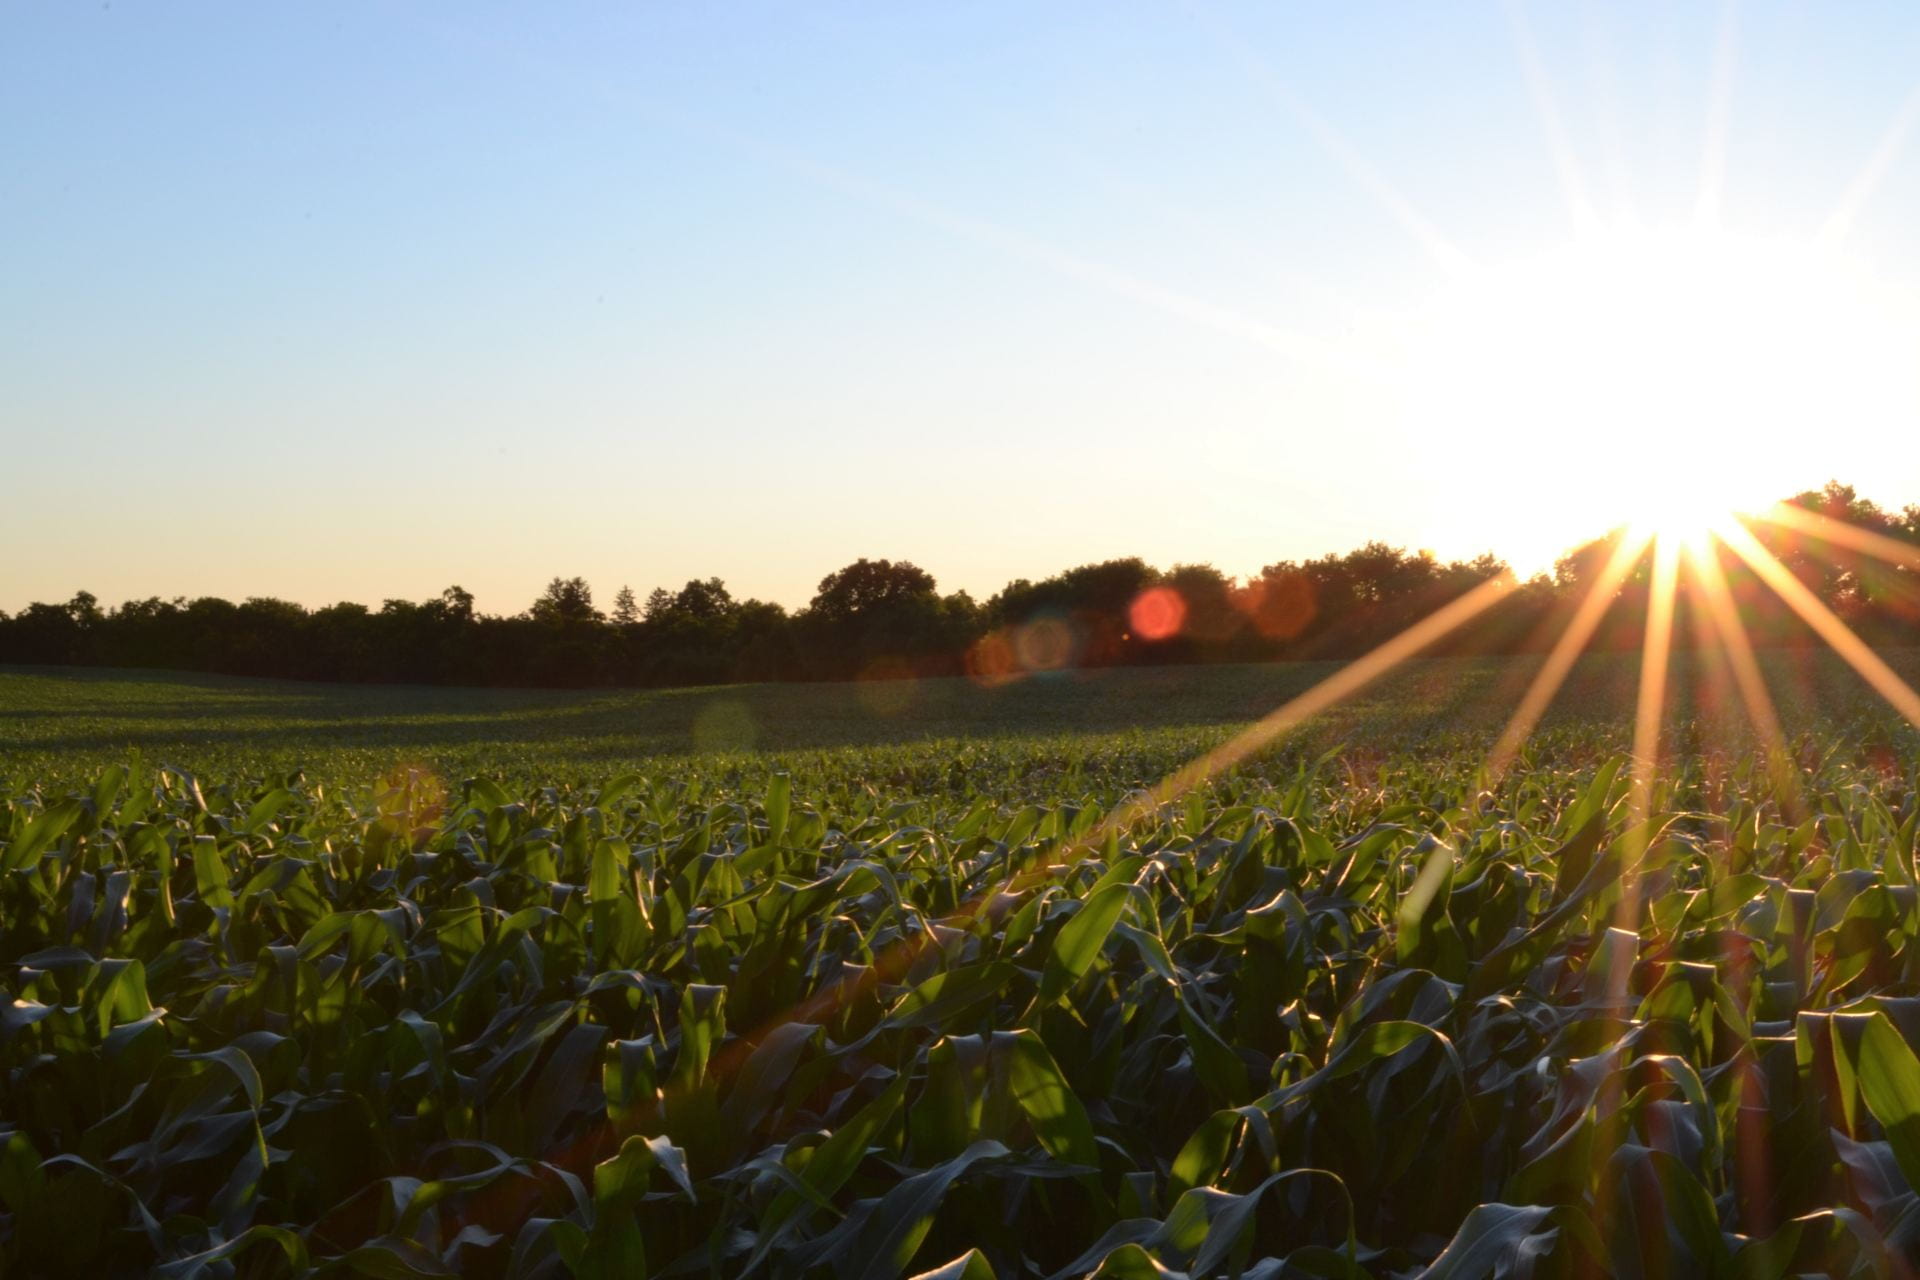 Sun over a corn field. Credit: Jake Gard, Unsplash, https://unsplash.com/photos/CetB-bTDBtY